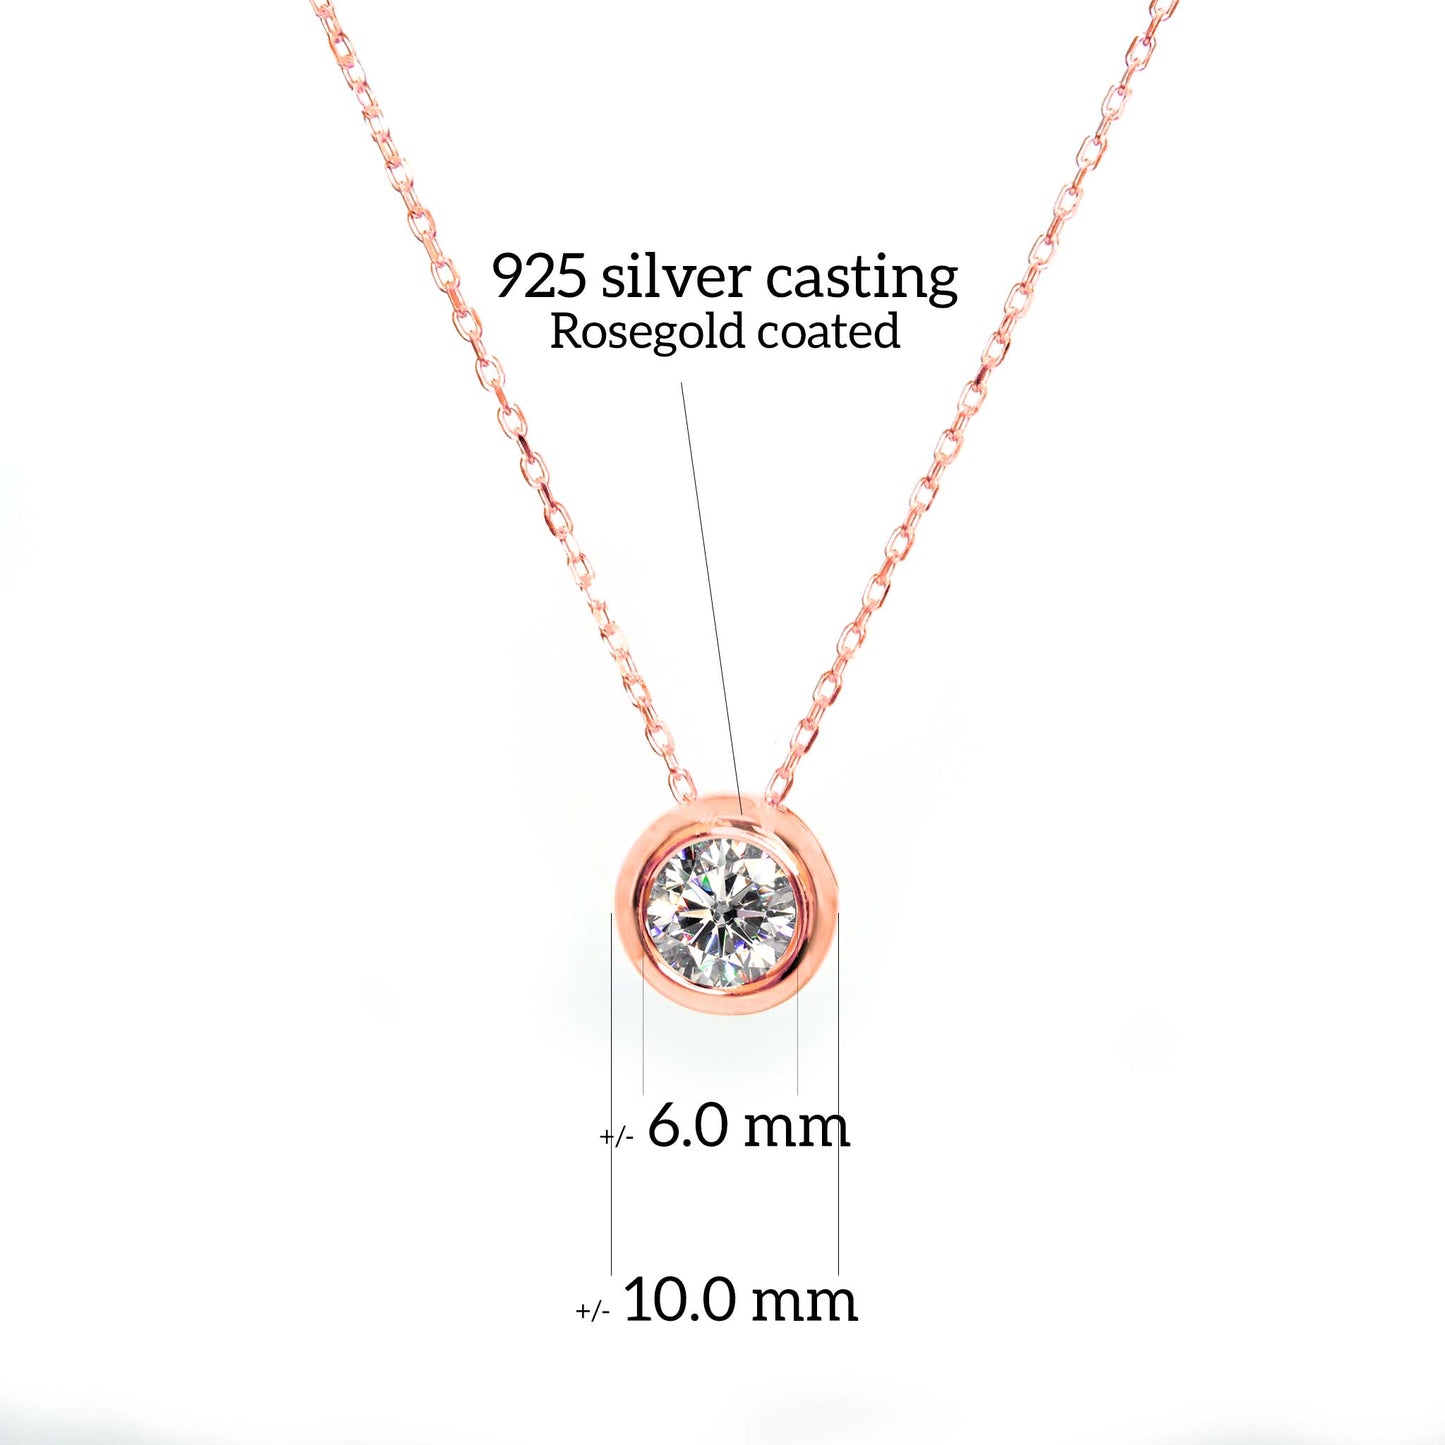 Nola moissanite necklace rose gold color - Shiraz Jewelry